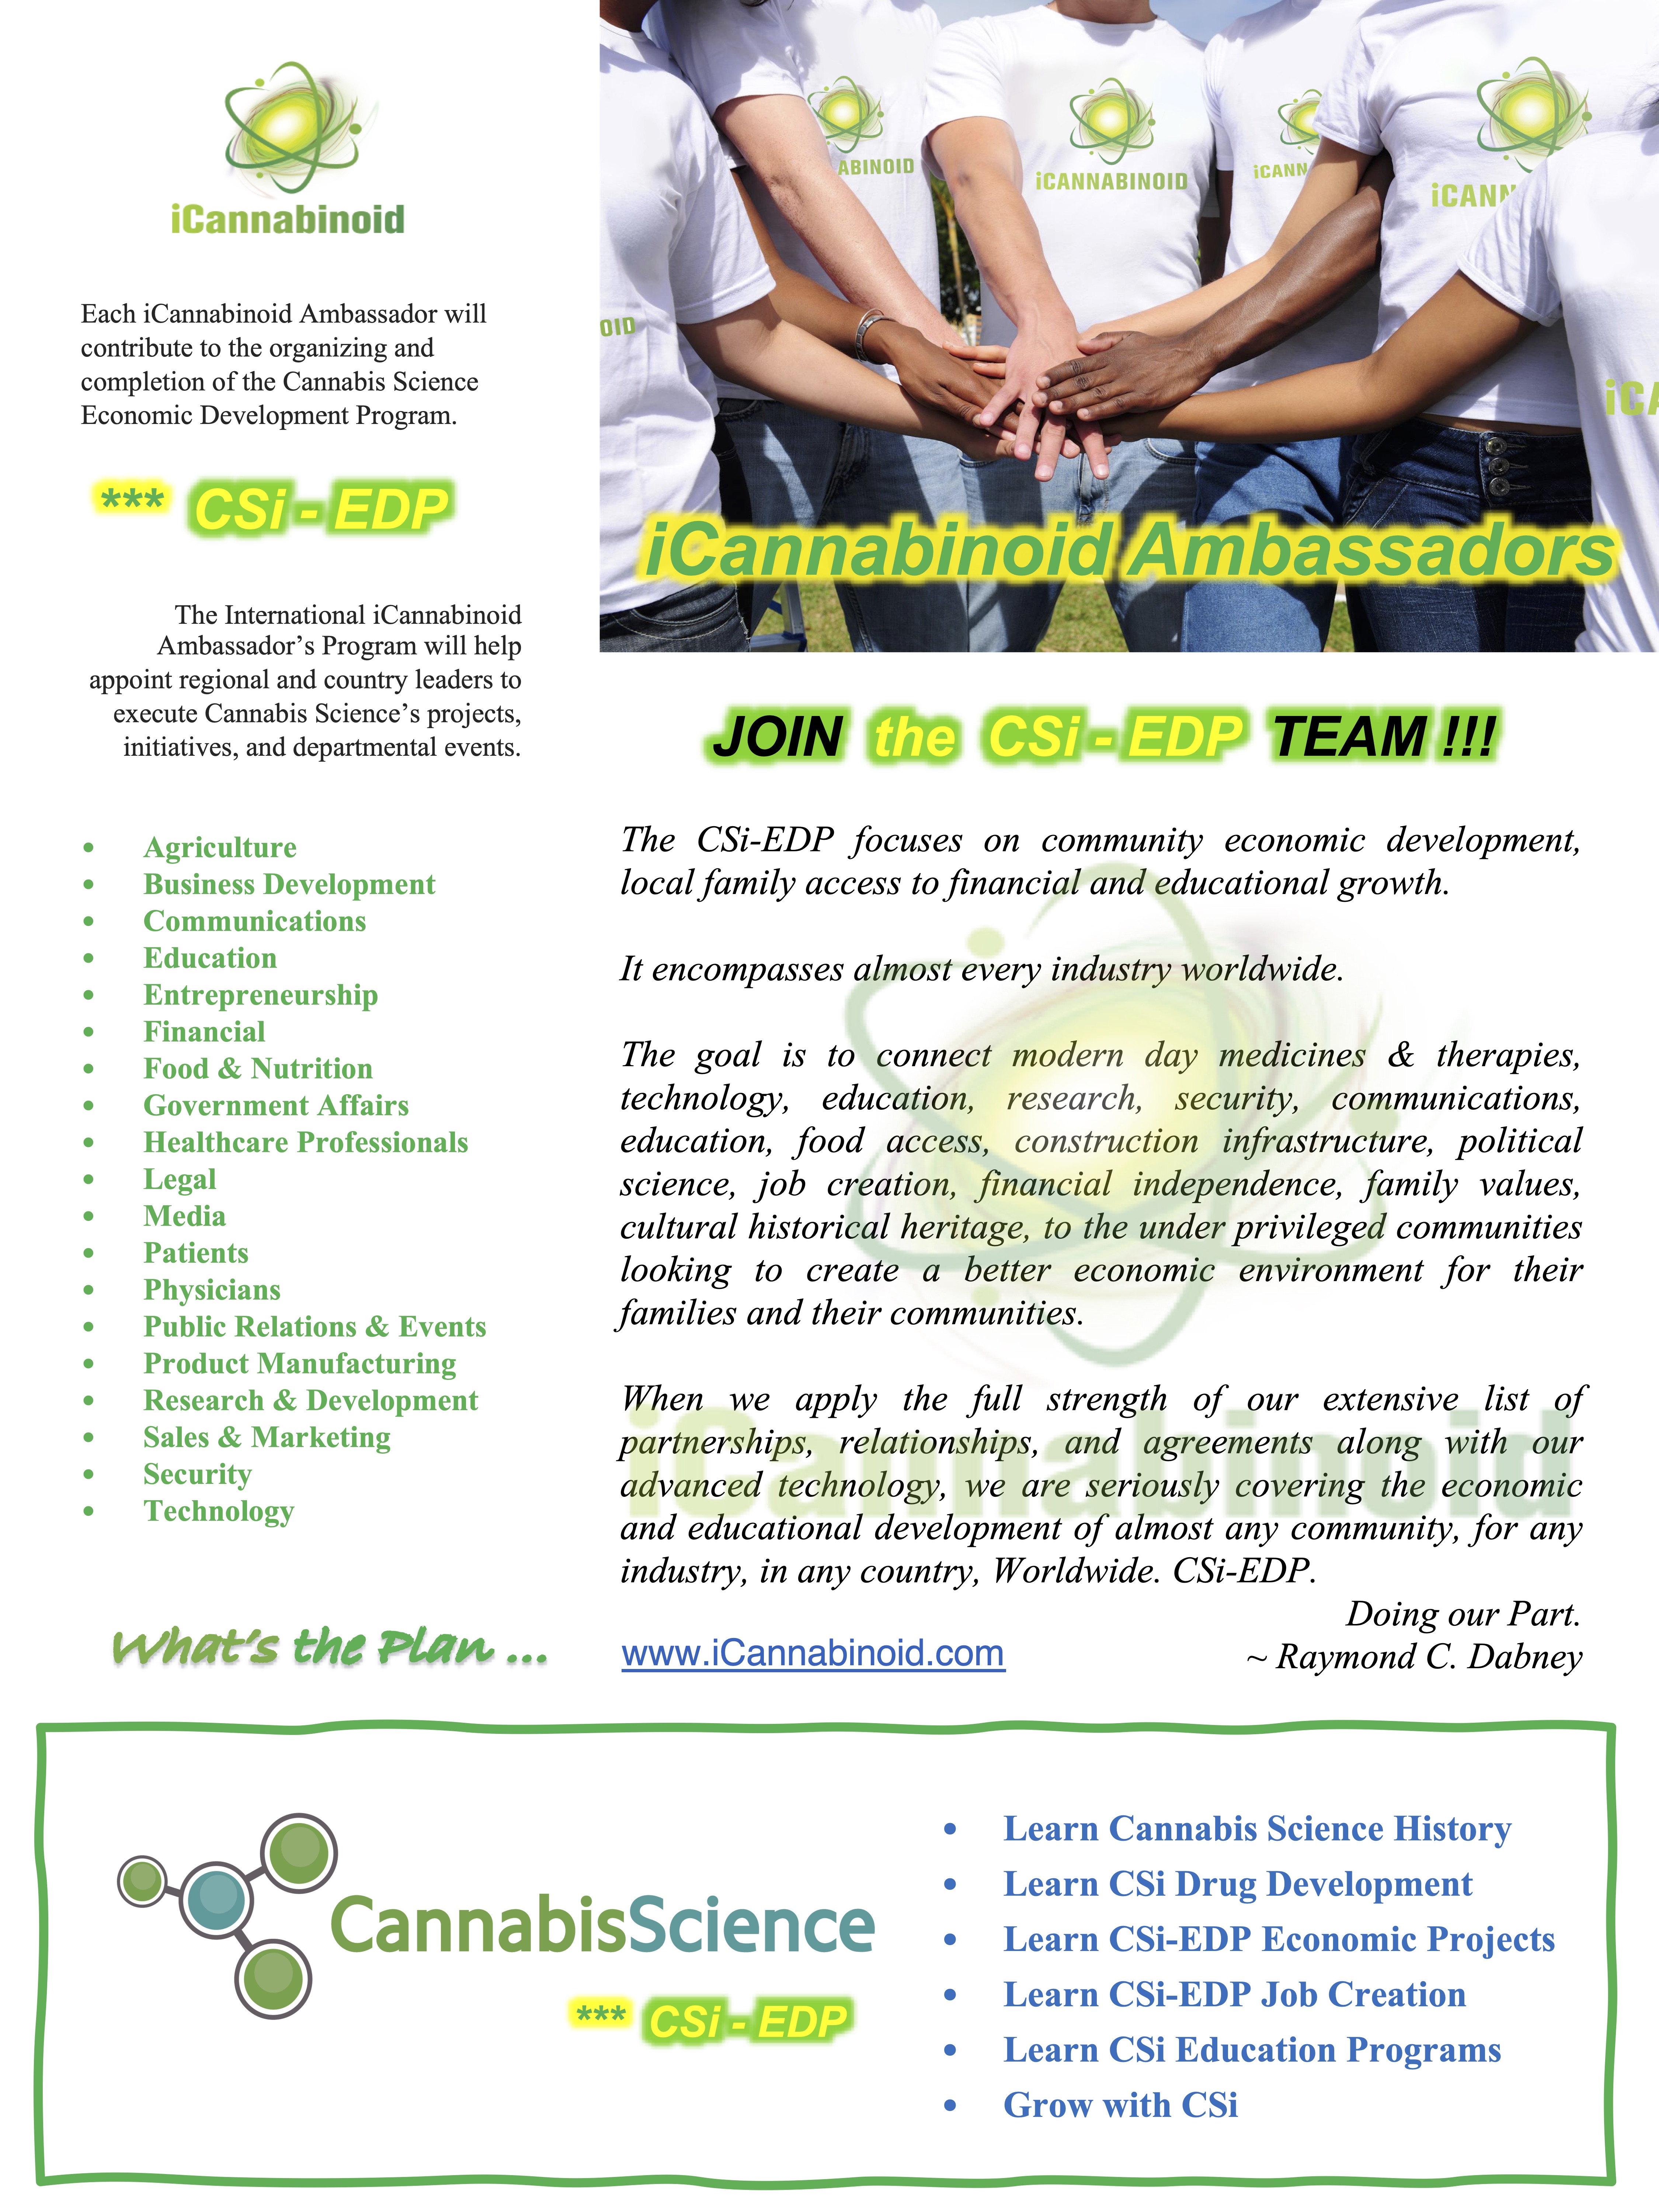  iCannabinoid Ambassadors Introduction, July 1st 2020